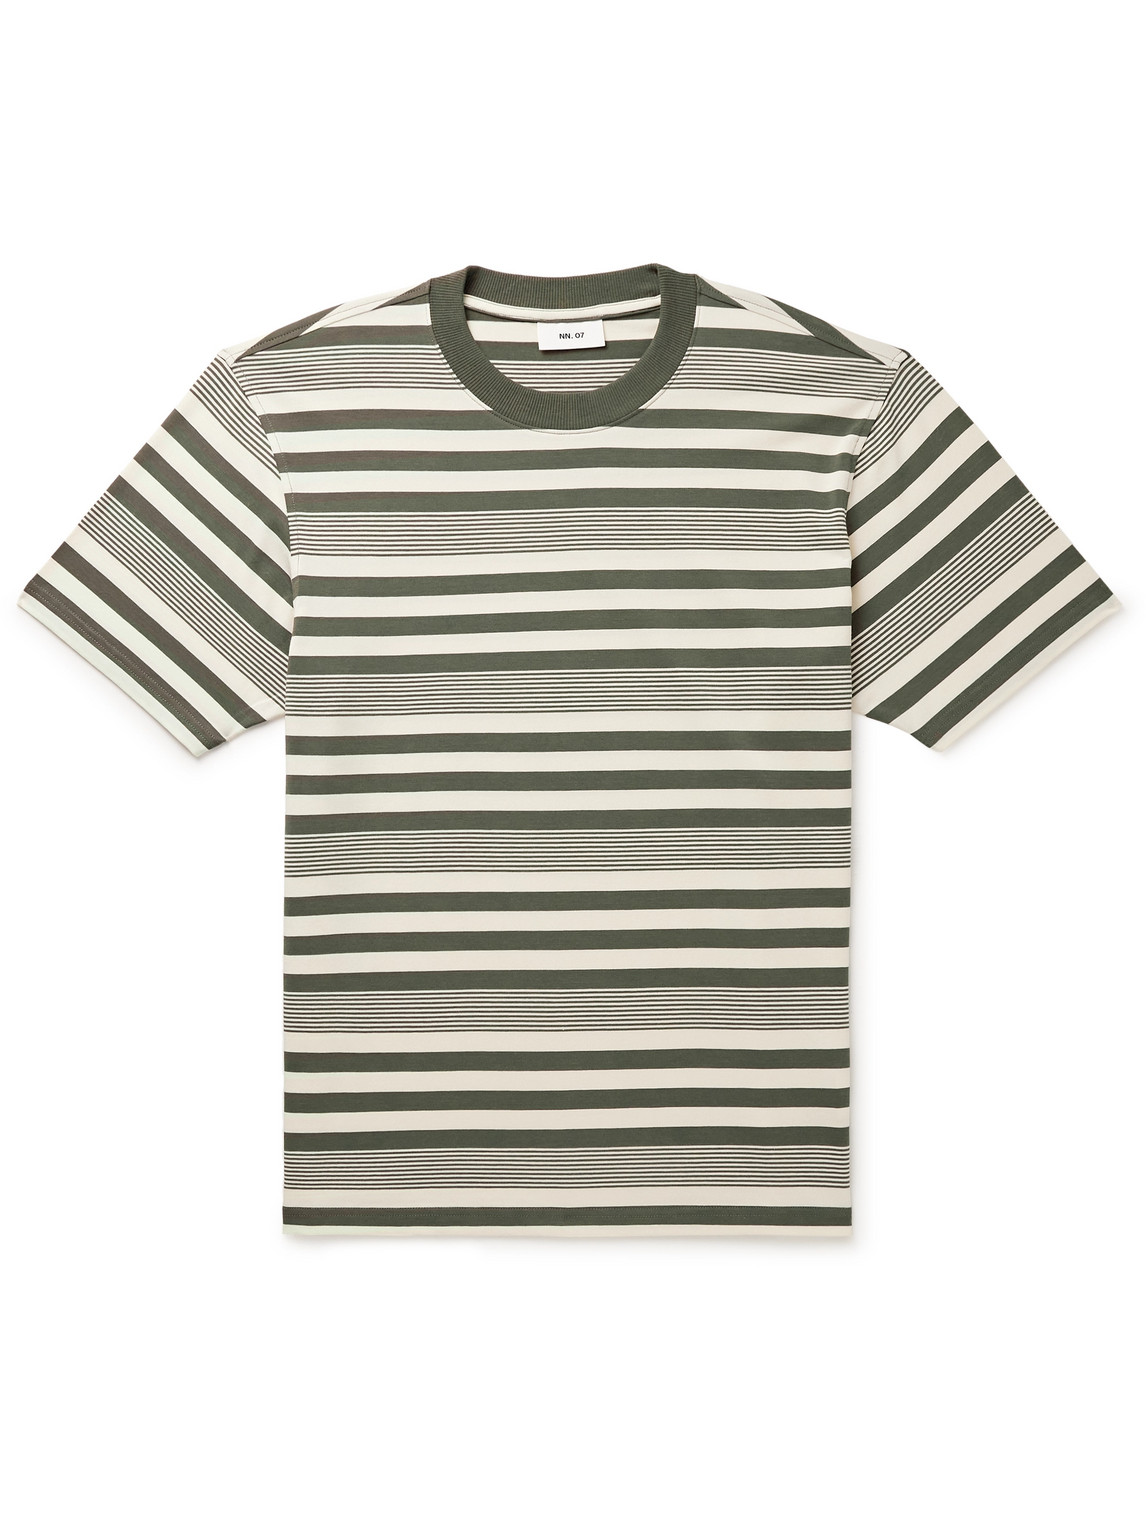 Adam 3461 Striped Stretch Modal and Cotton-Blend Jersey T-Shirt